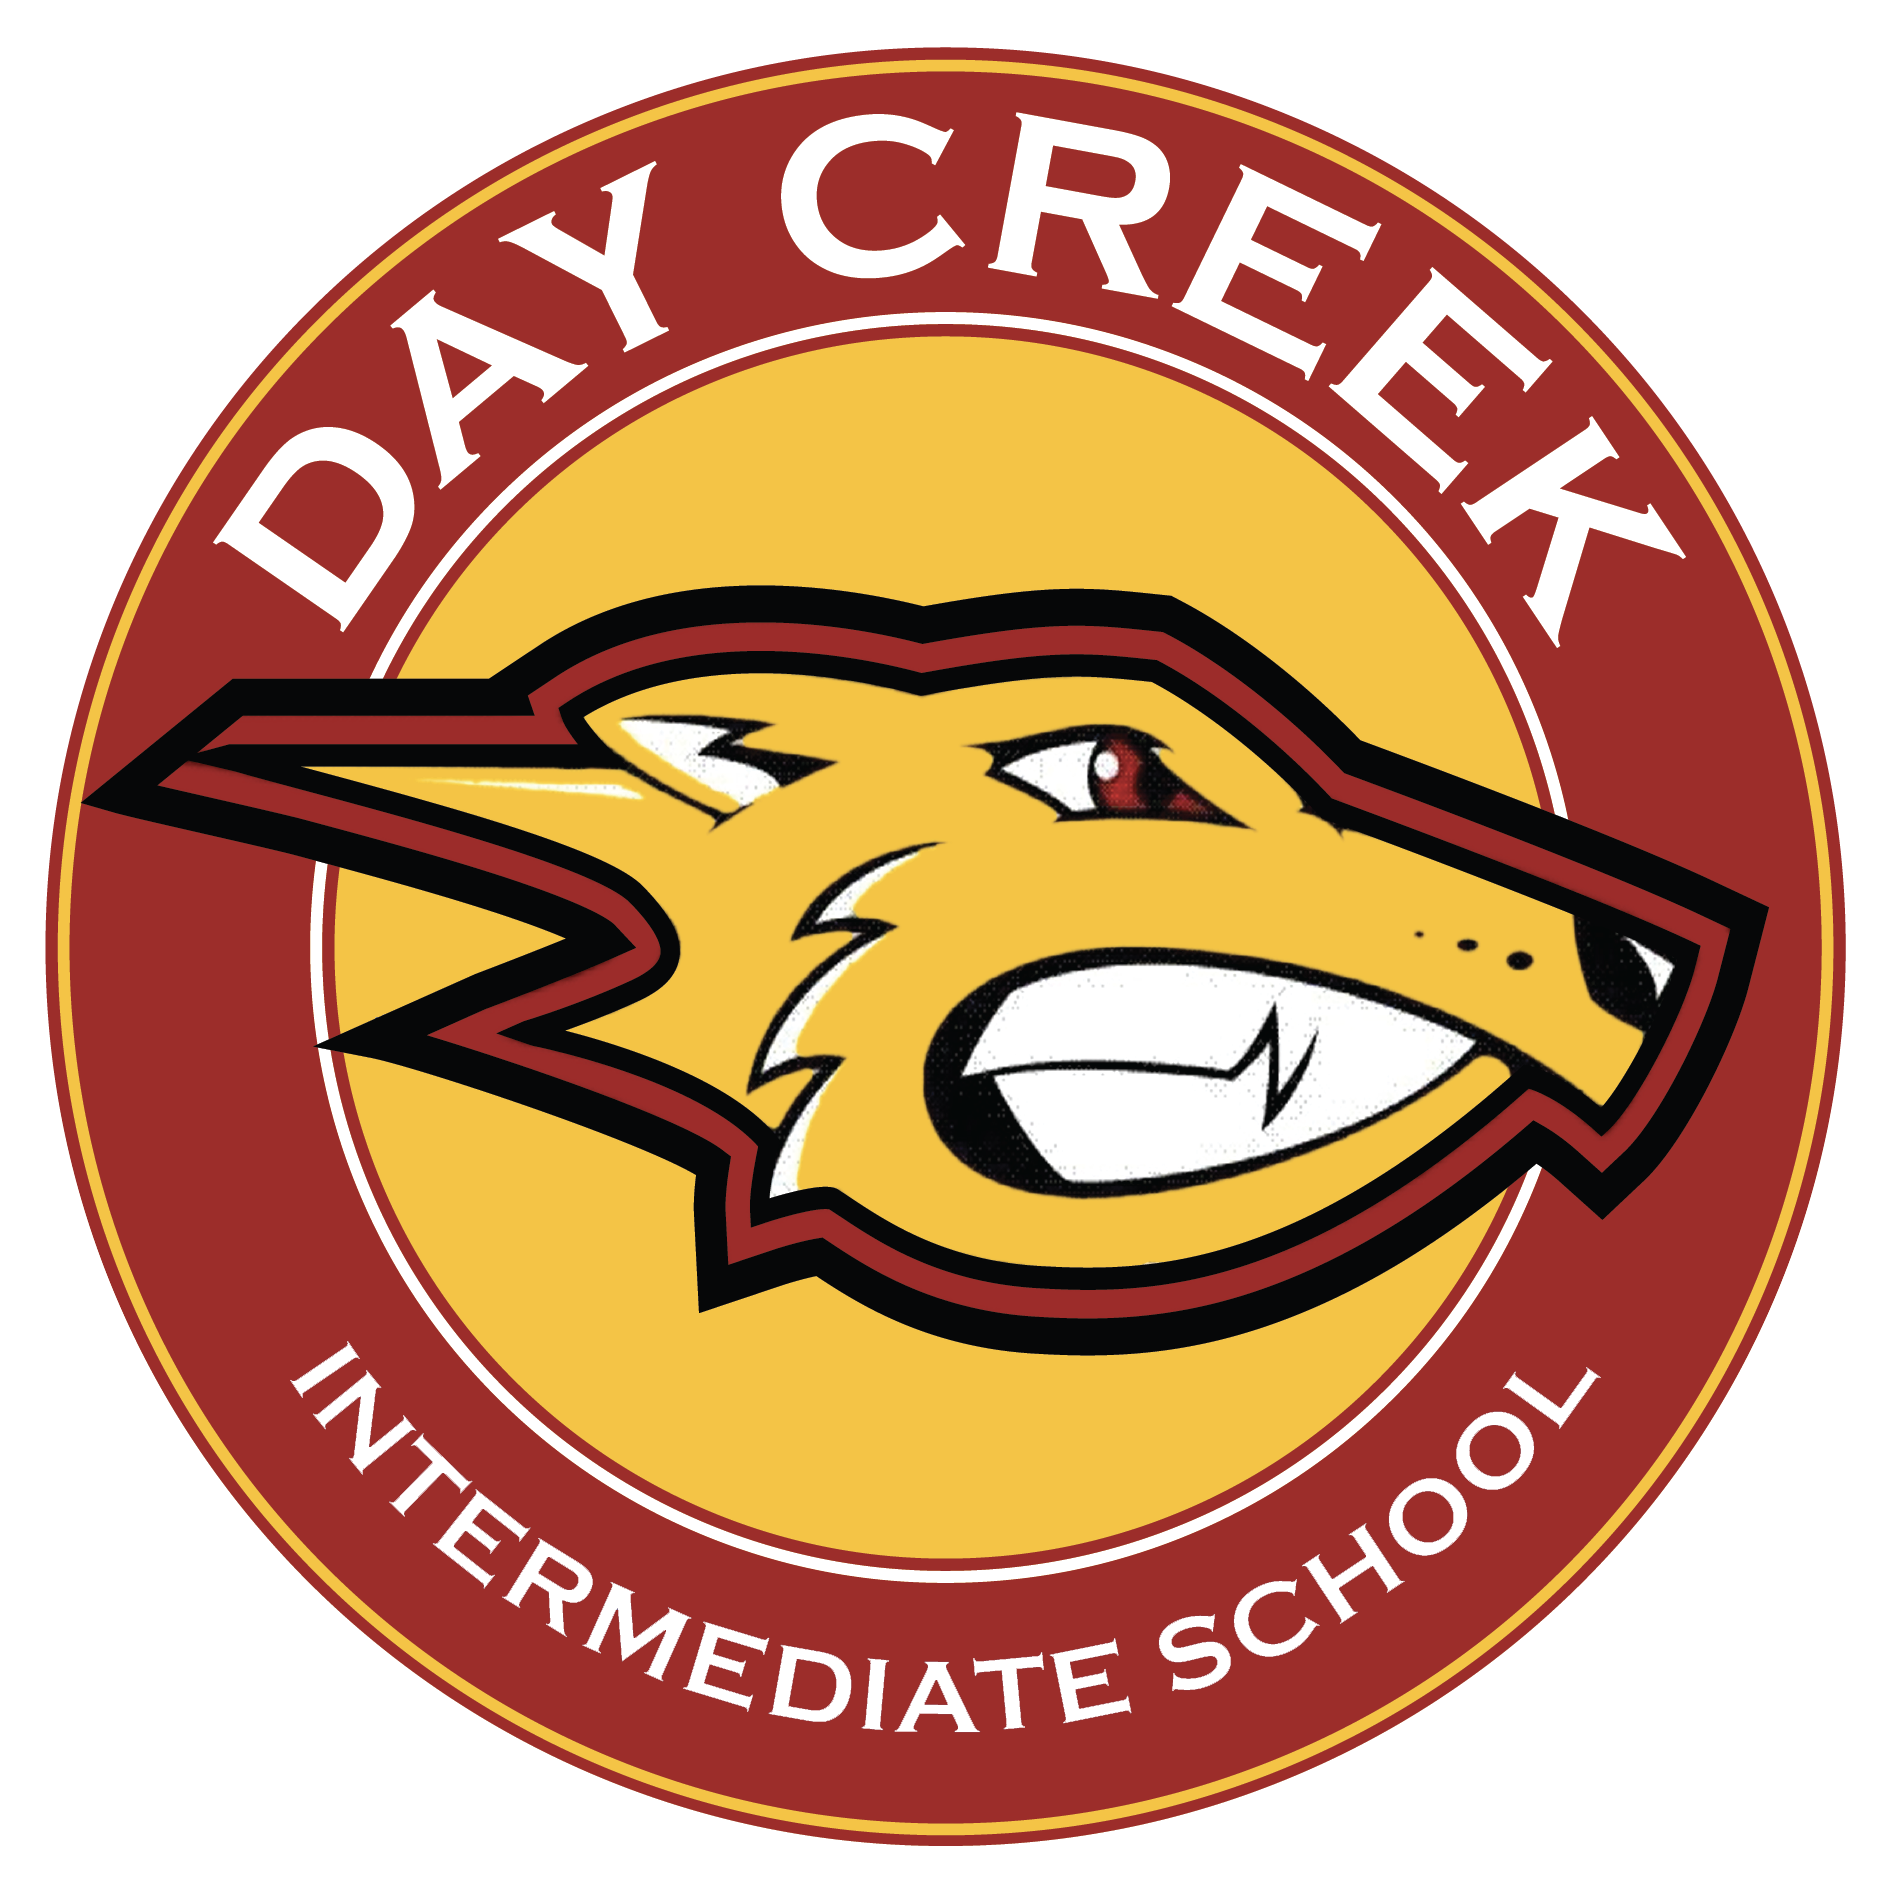 Day Creek Intermediate School